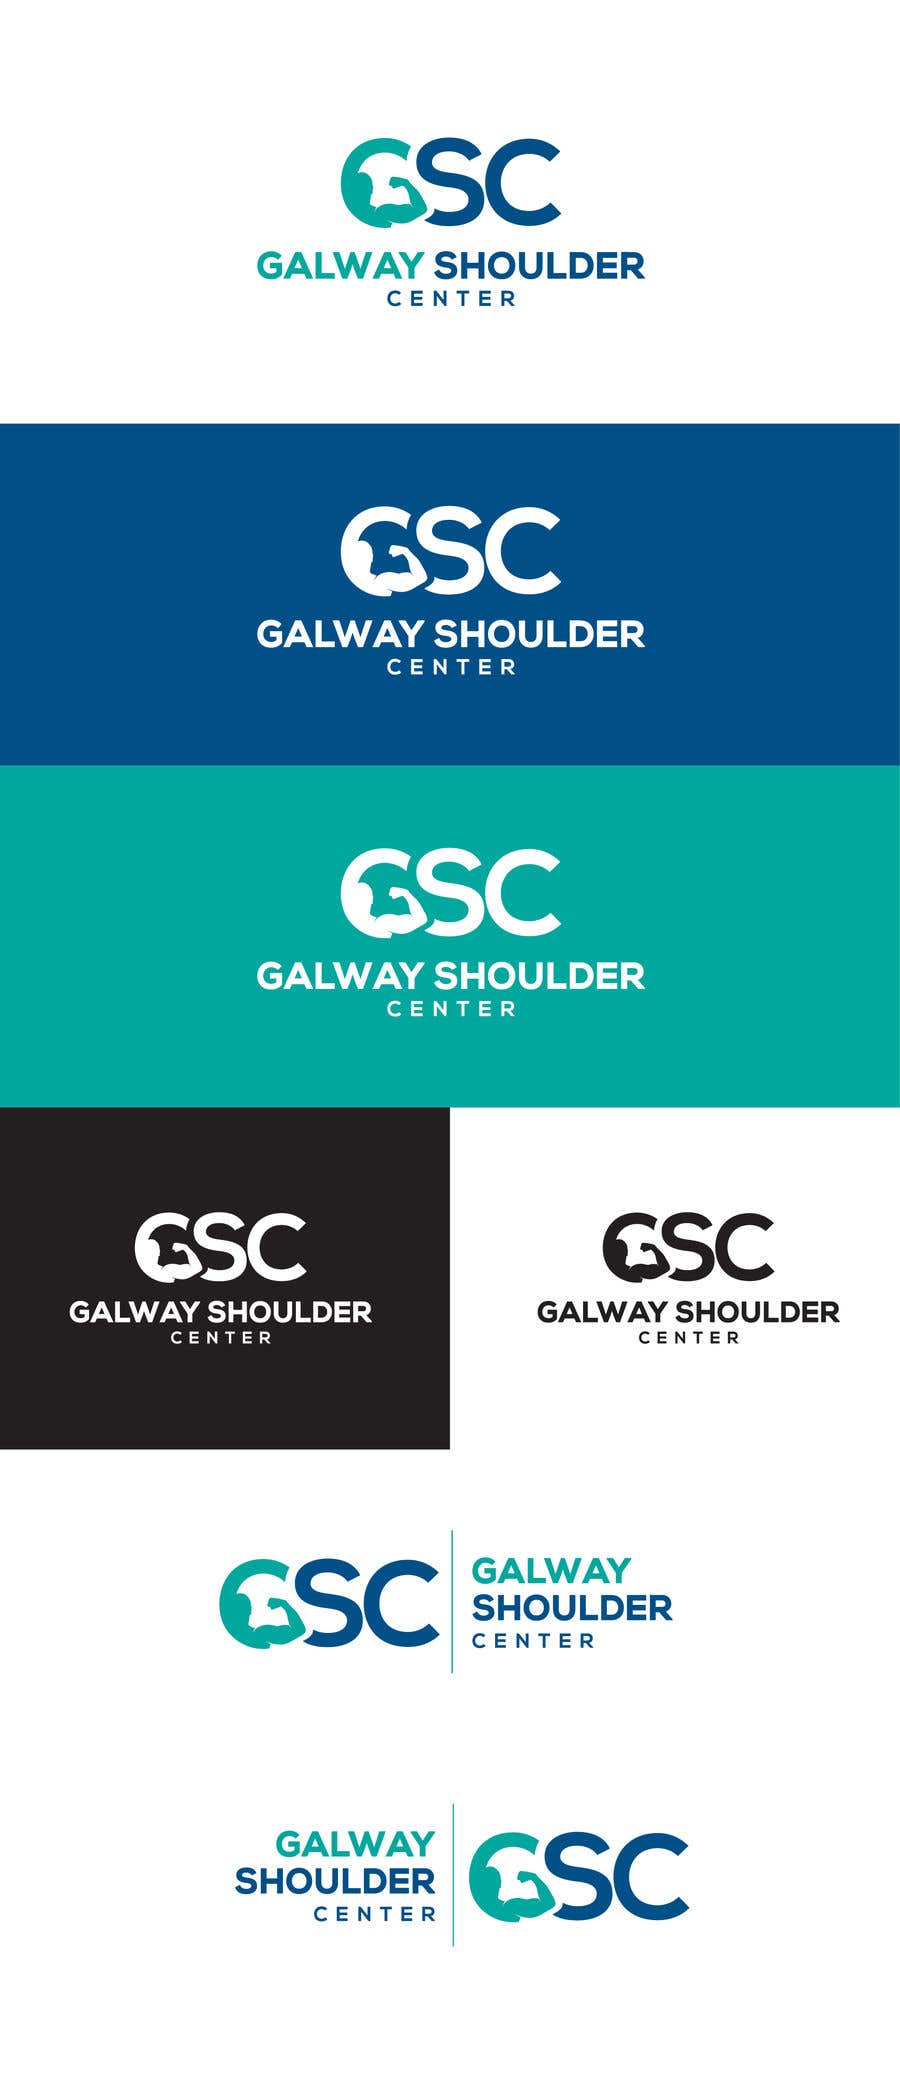 Zgłoszenie konkursowe o numerze #117 do konkursu o nazwie                                                 creating logo for Galway Shoulder Institute and Galway Shoulder Center
                                            